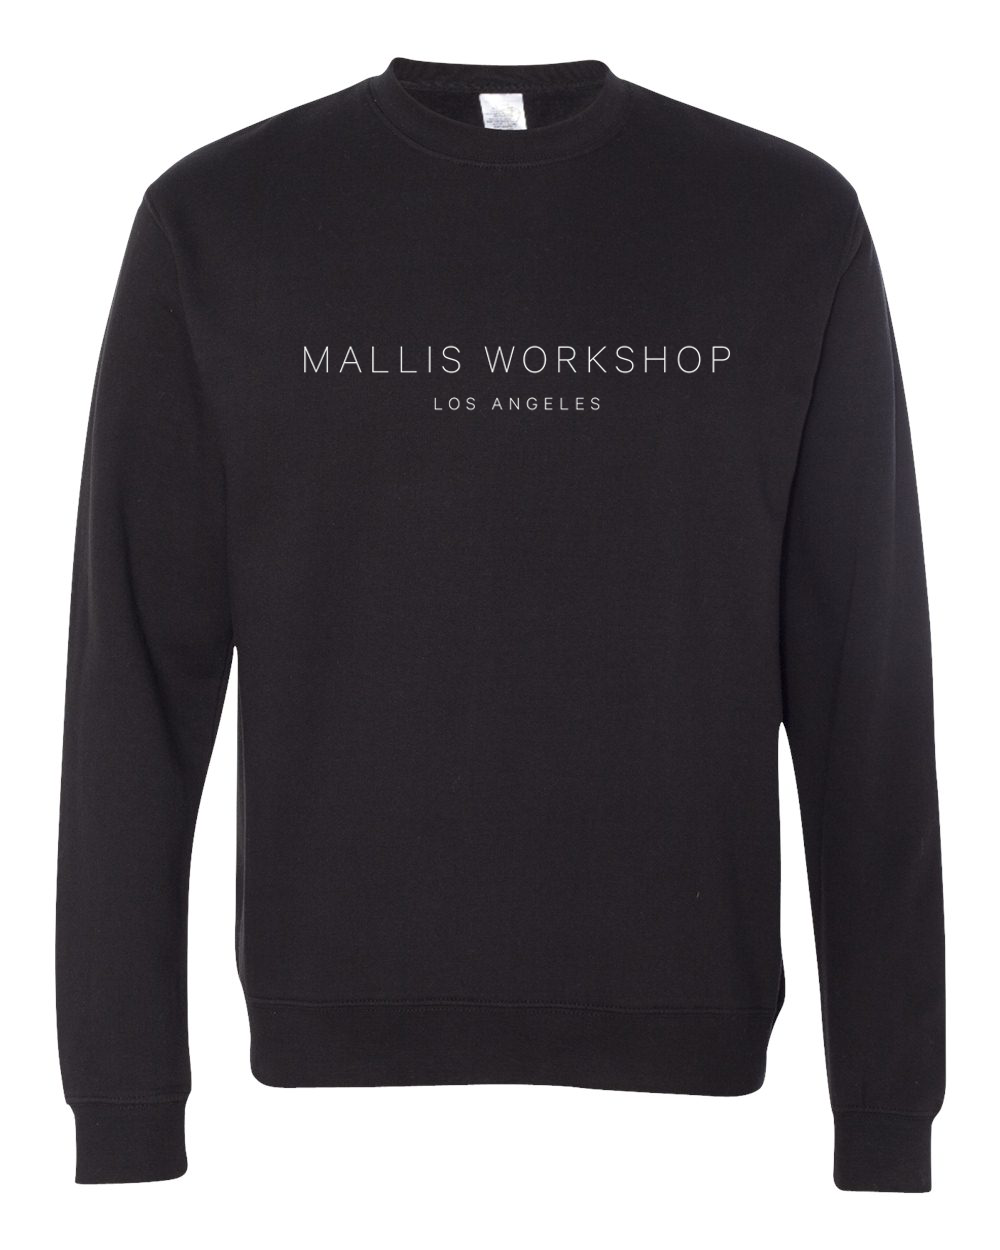 Mallis Workshop Black Crew Sweatshirt